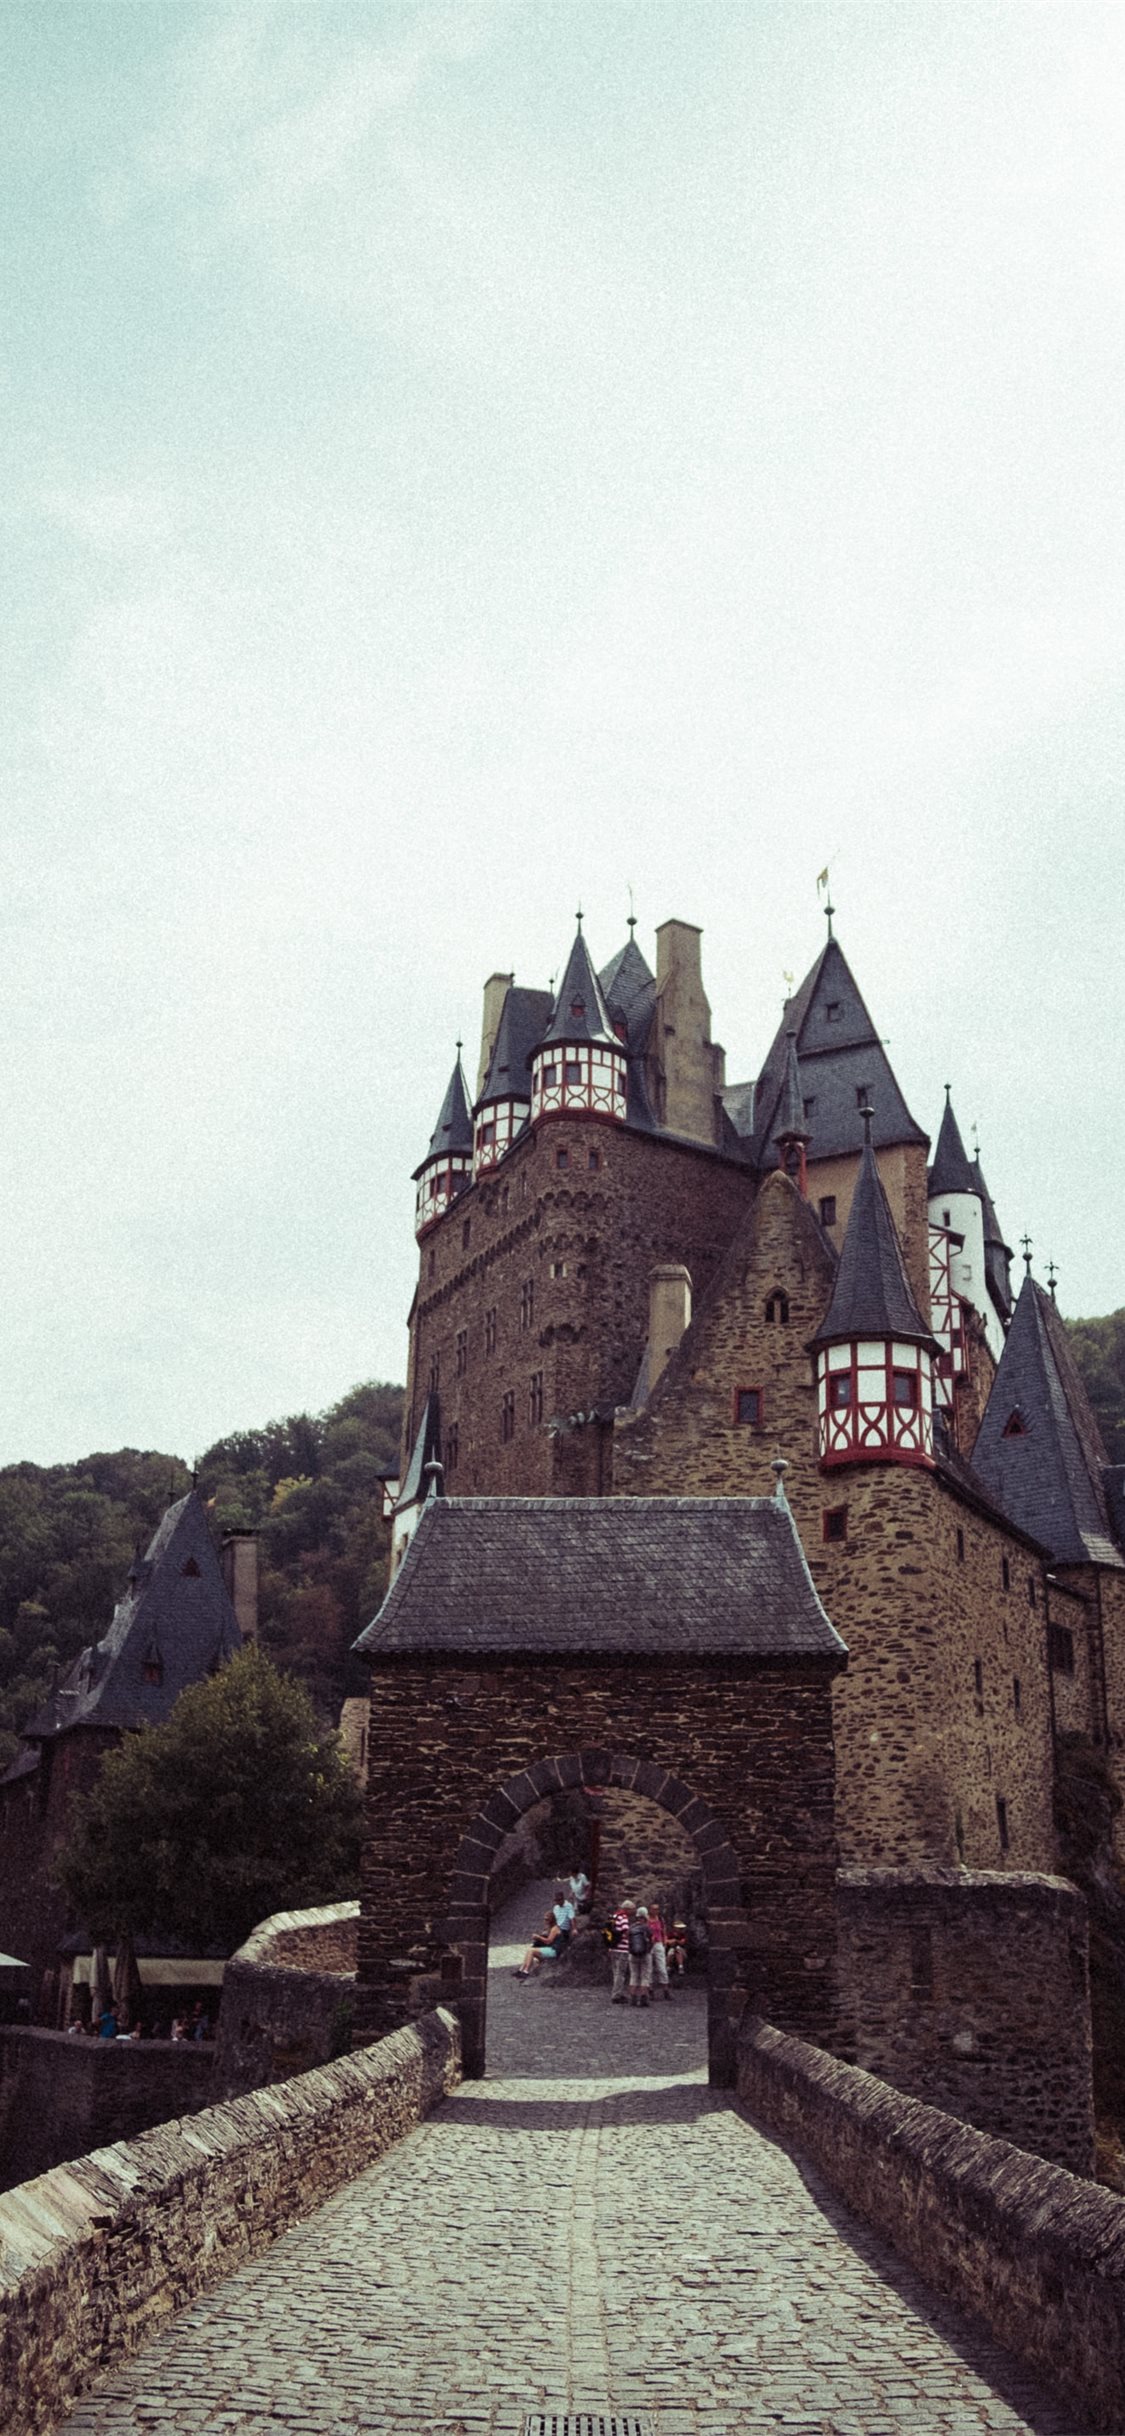 We visited the castle eltz An impressive castle iPhone X Wallpaper Free Download